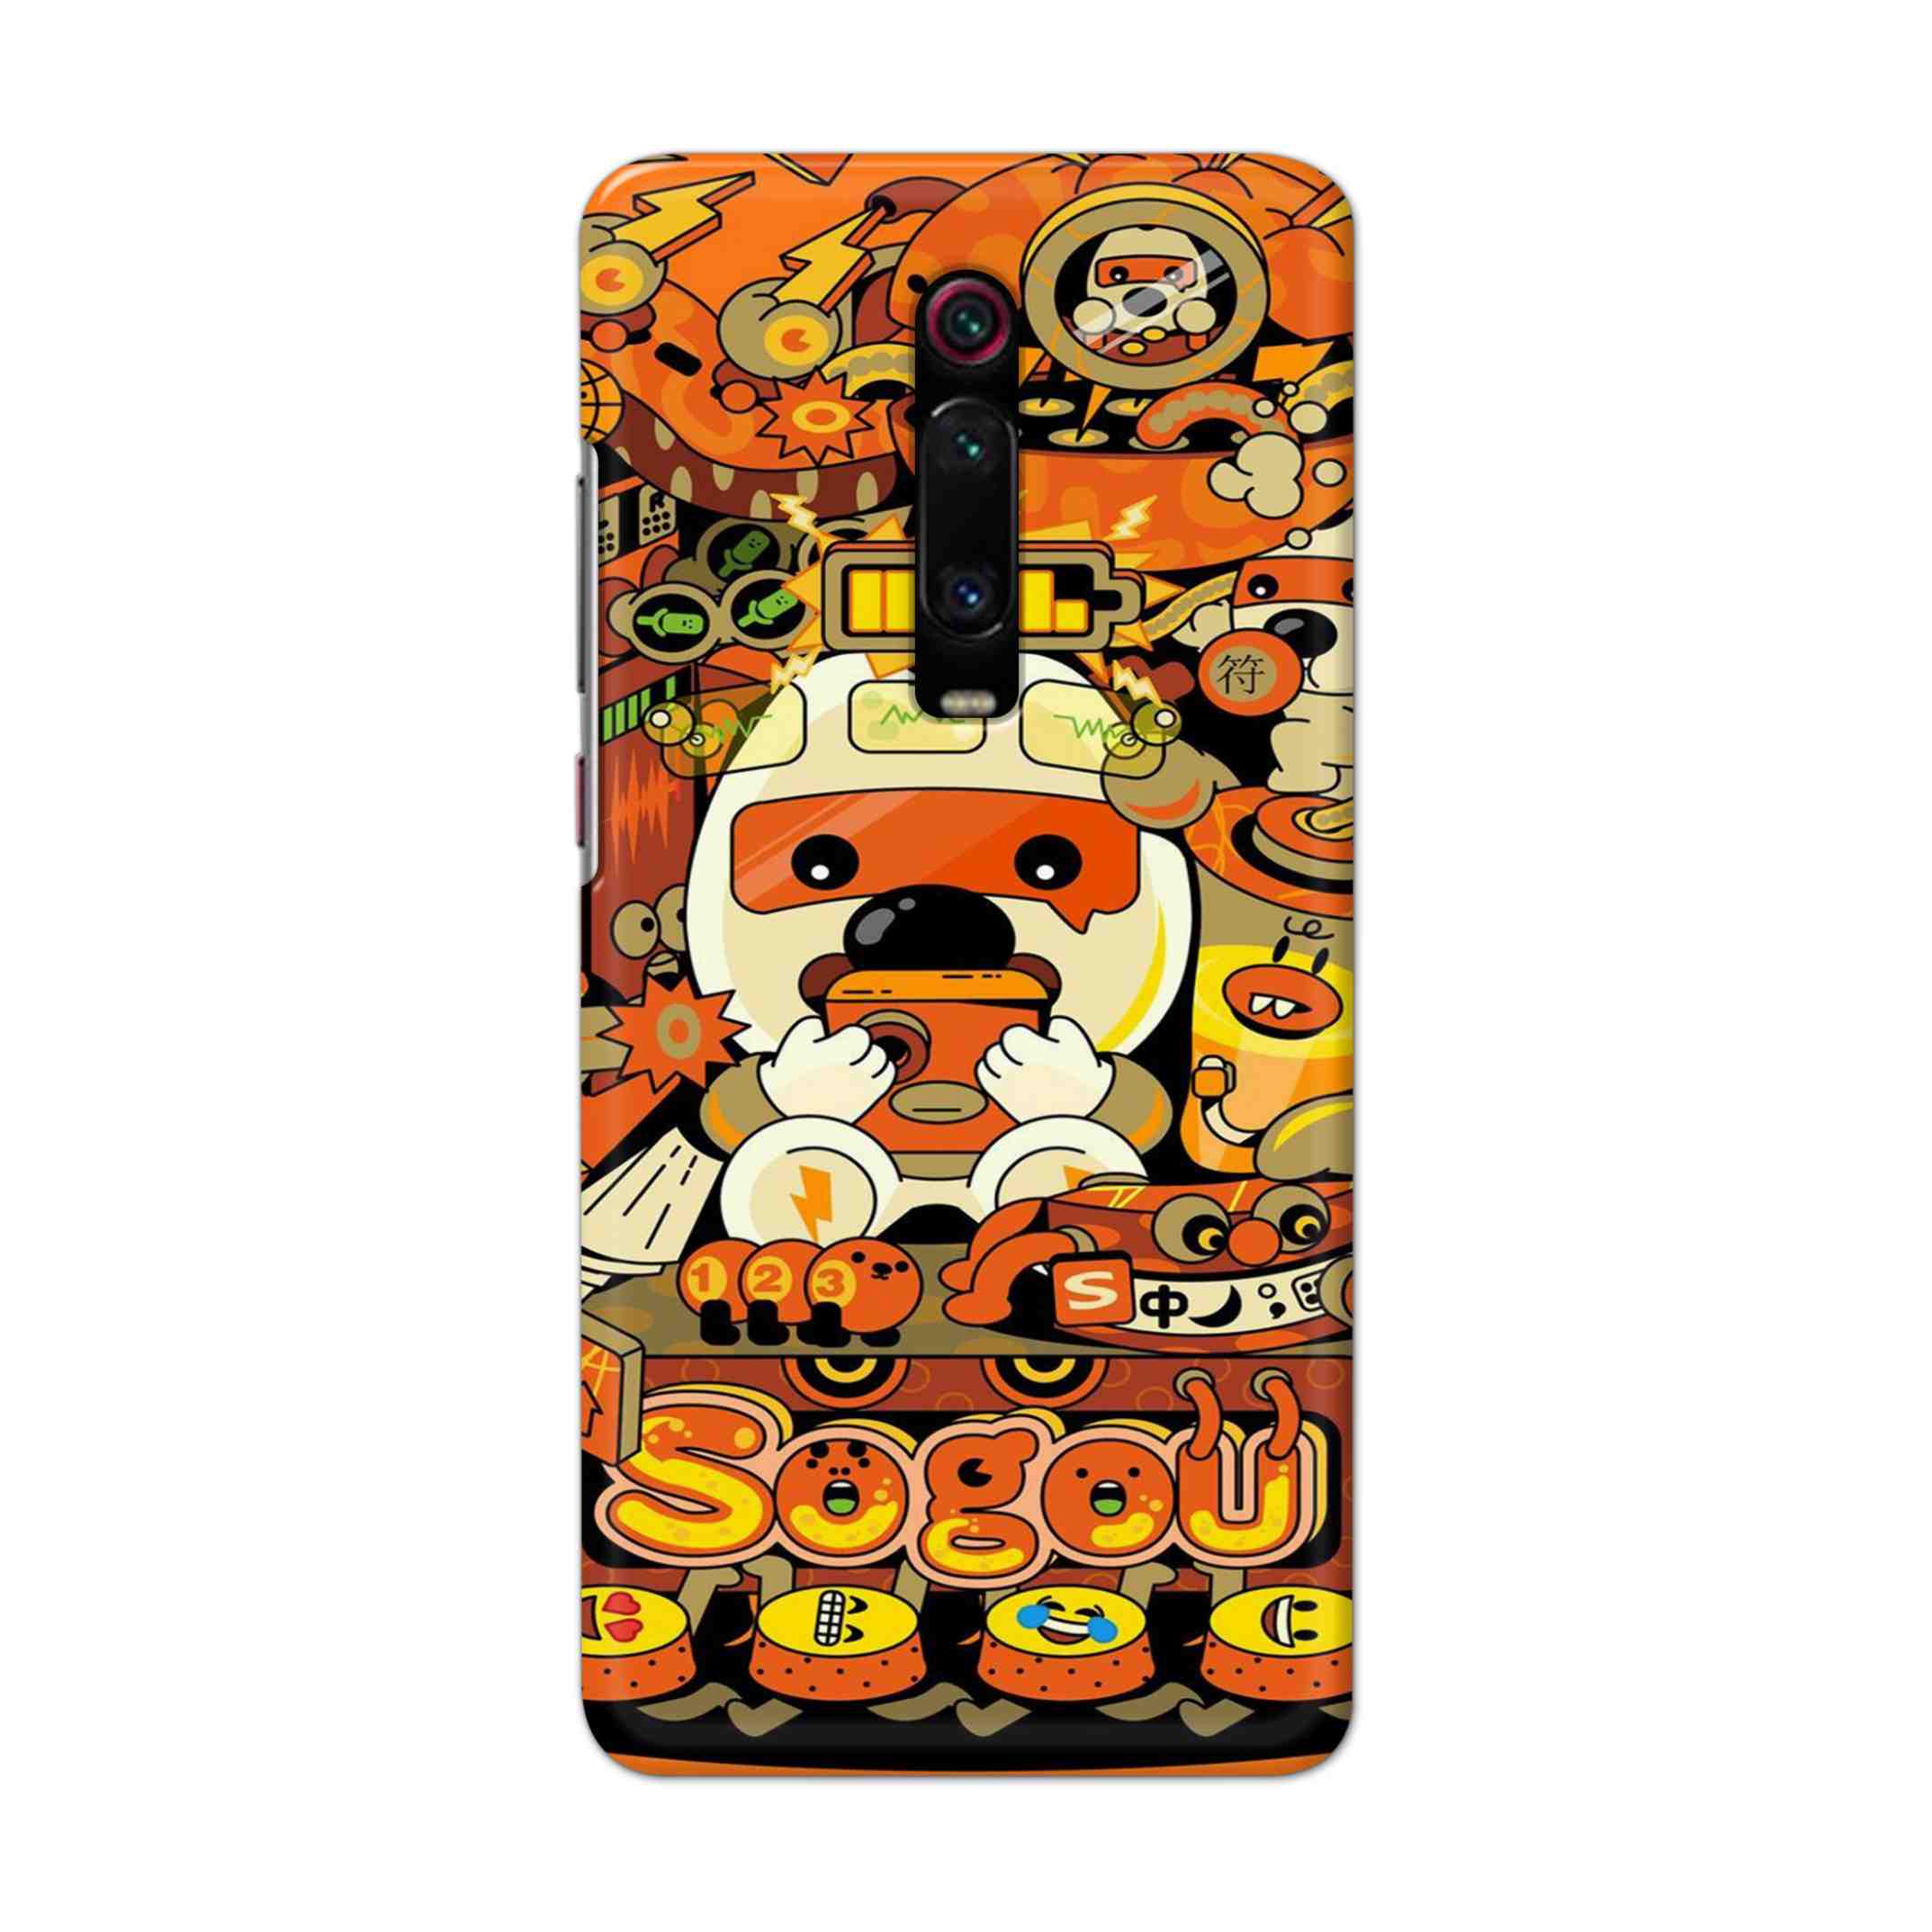 Buy Sogou Hard Back Mobile Phone Case Cover For Xiaomi Redmi K20 Online